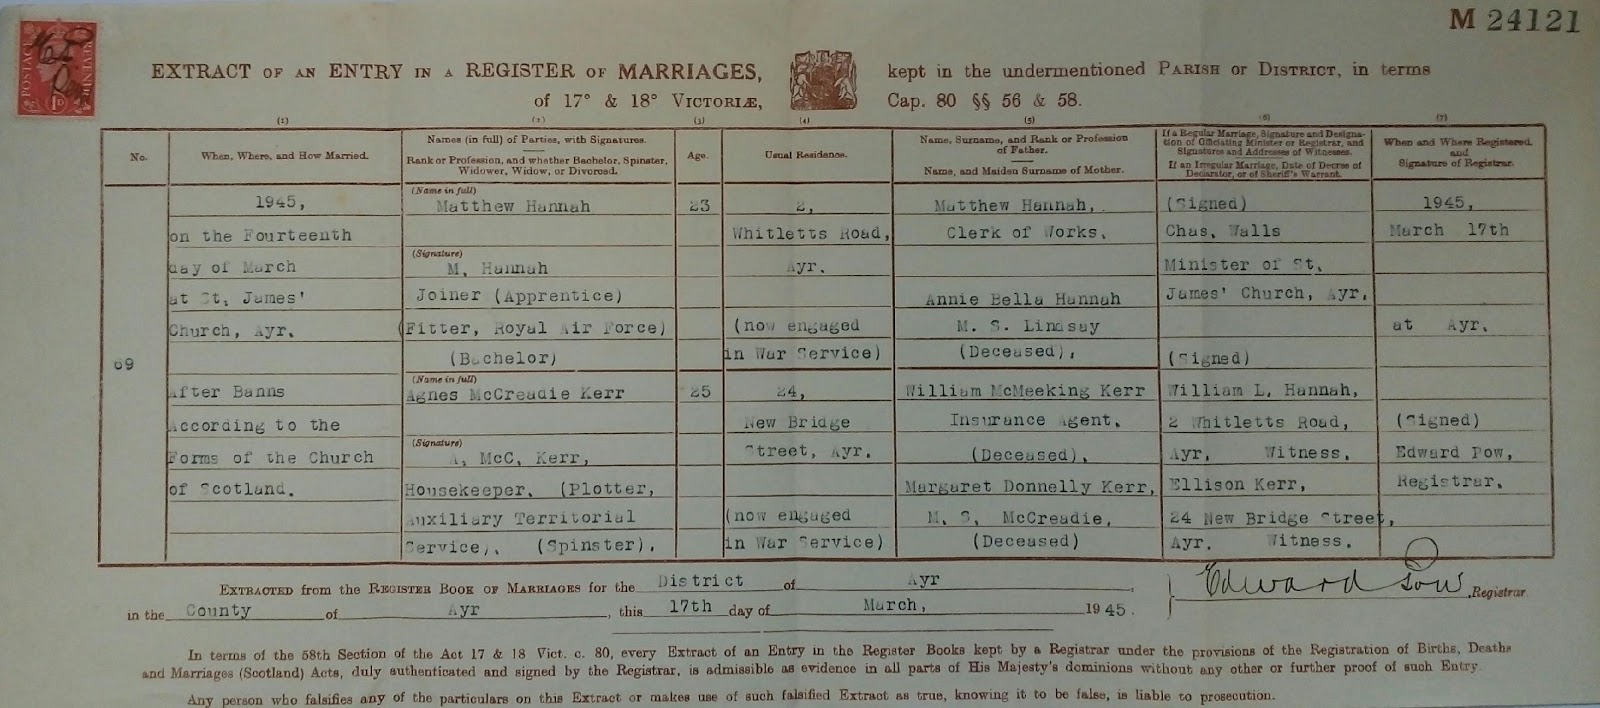 C:\Users\Main user\Pictures\Matt Hannah's Family\Hannah Certificates\Matthew Hannah and Agnes Kerr Marriage Certificate.jpg